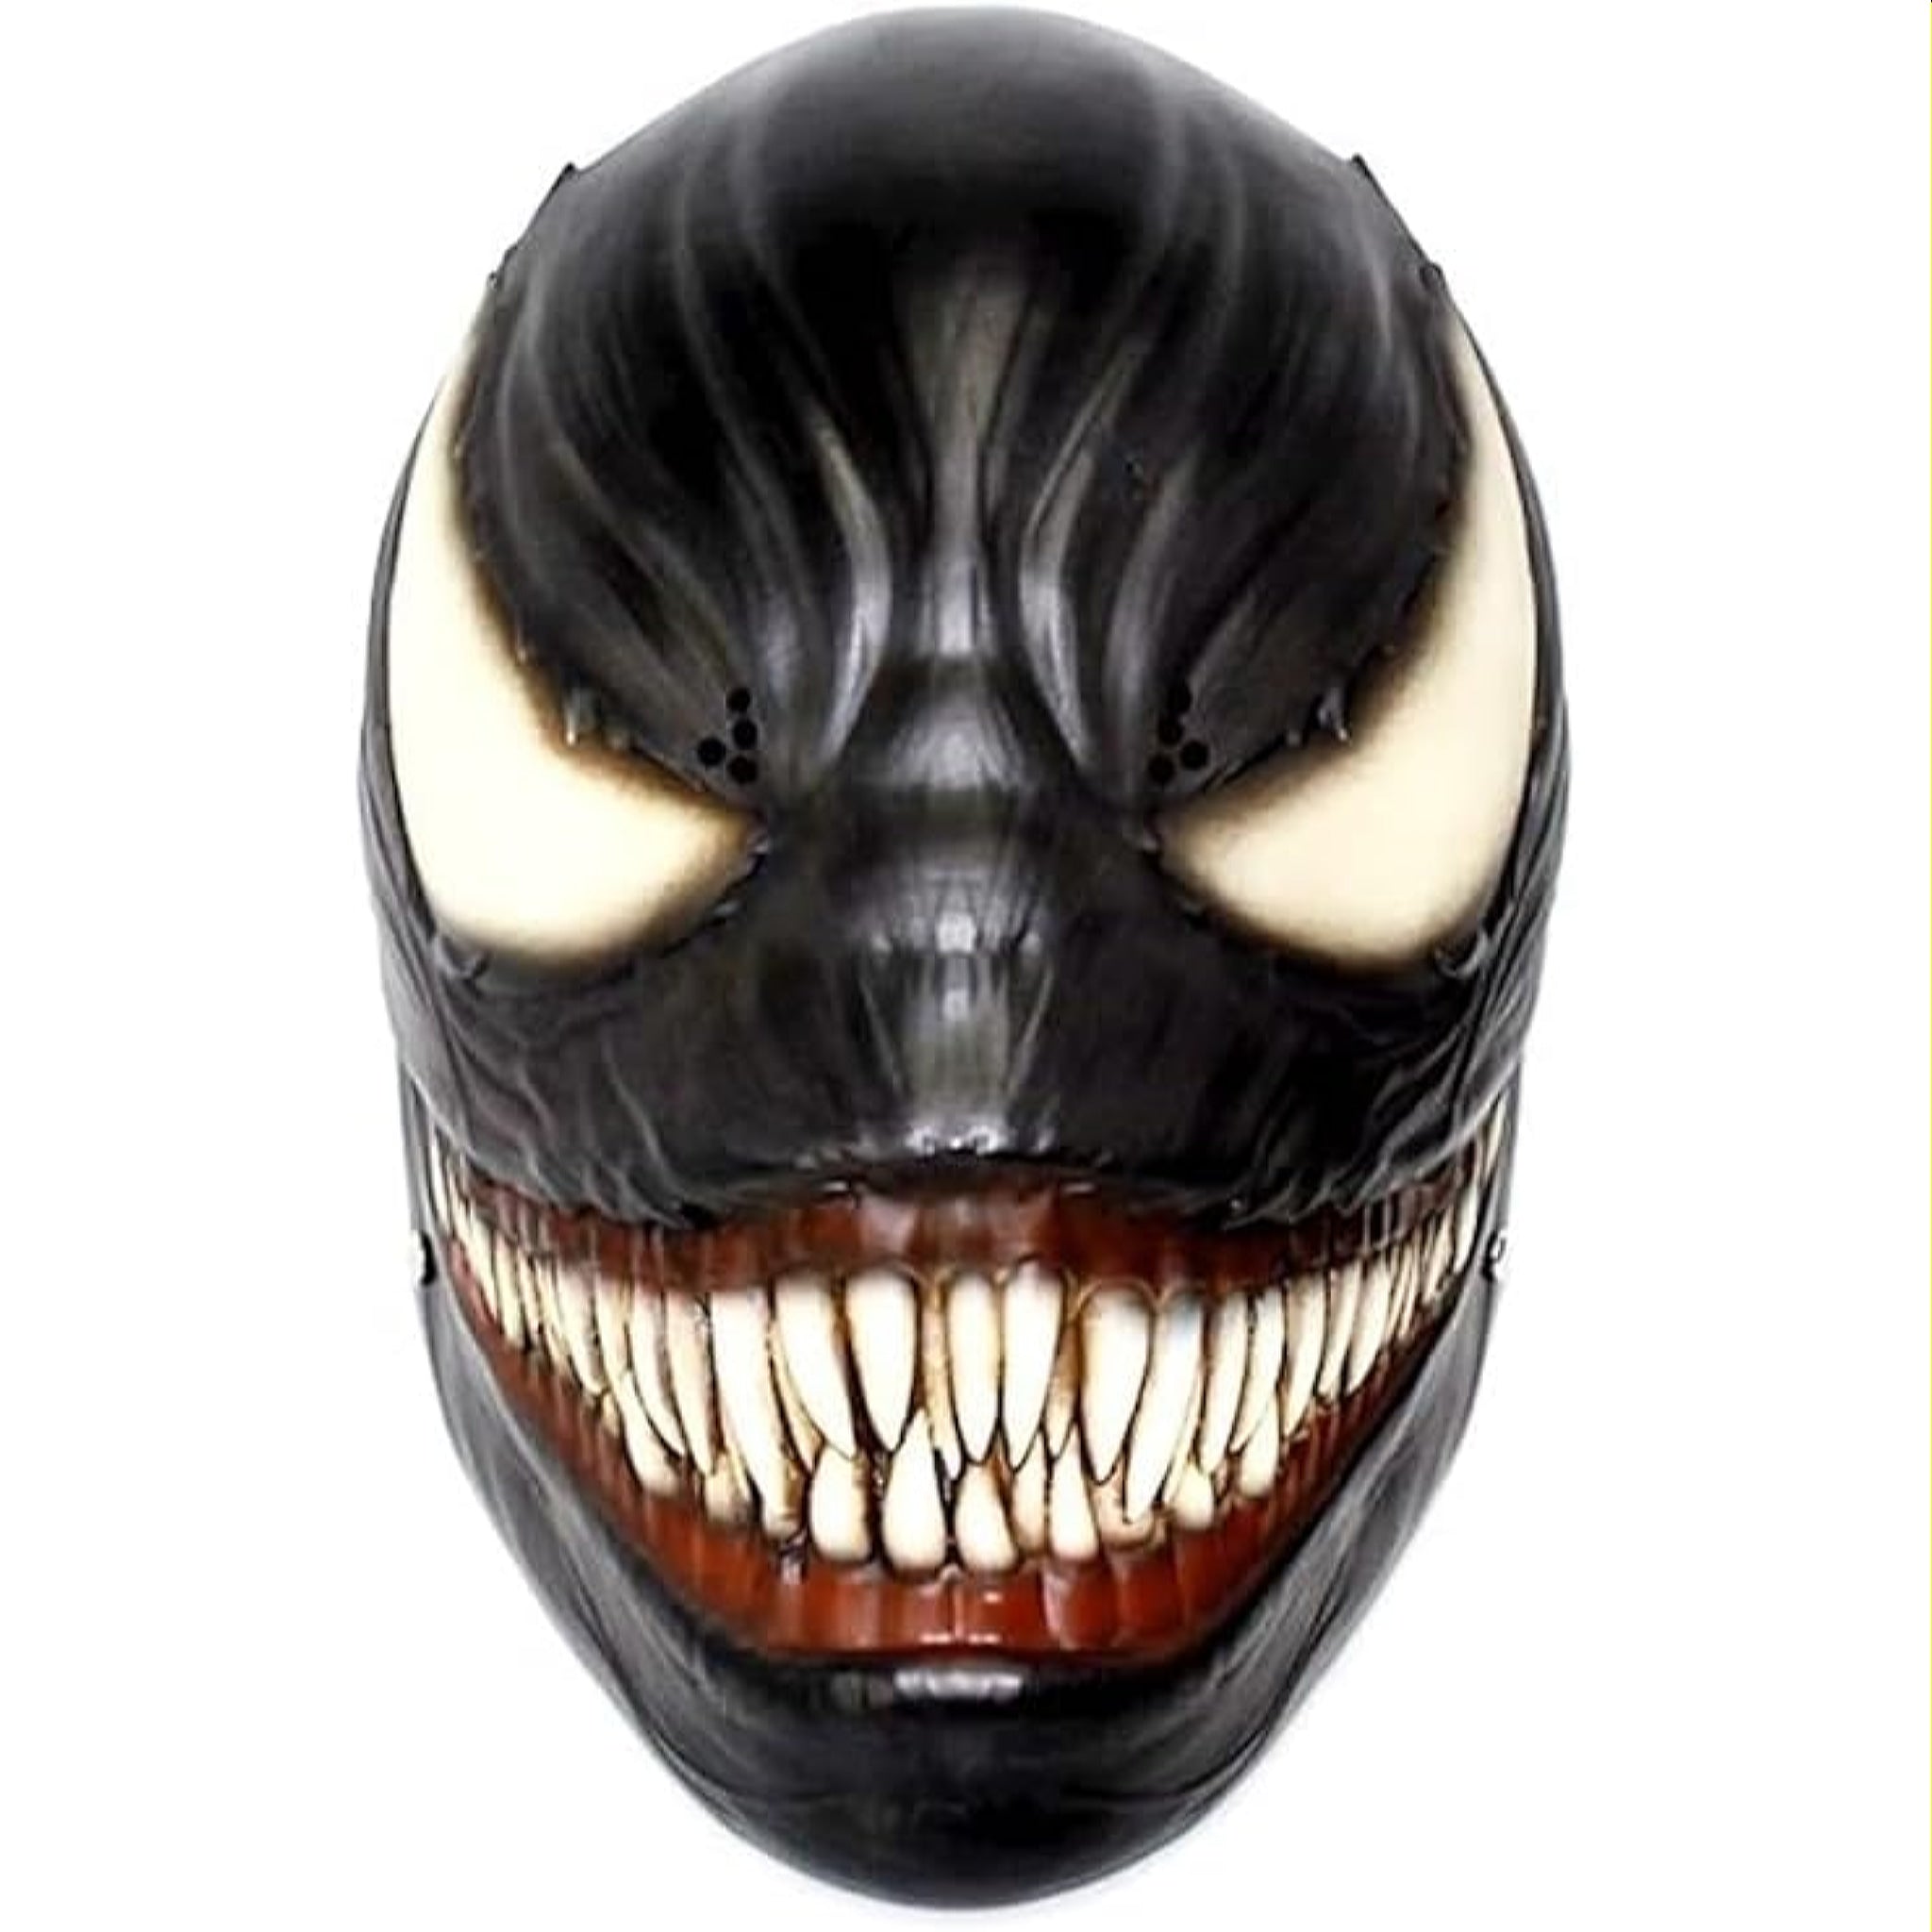 Venom Resin Mask Sentient Alien Symbiote Mask Halloween Cosplay Fancy Dress